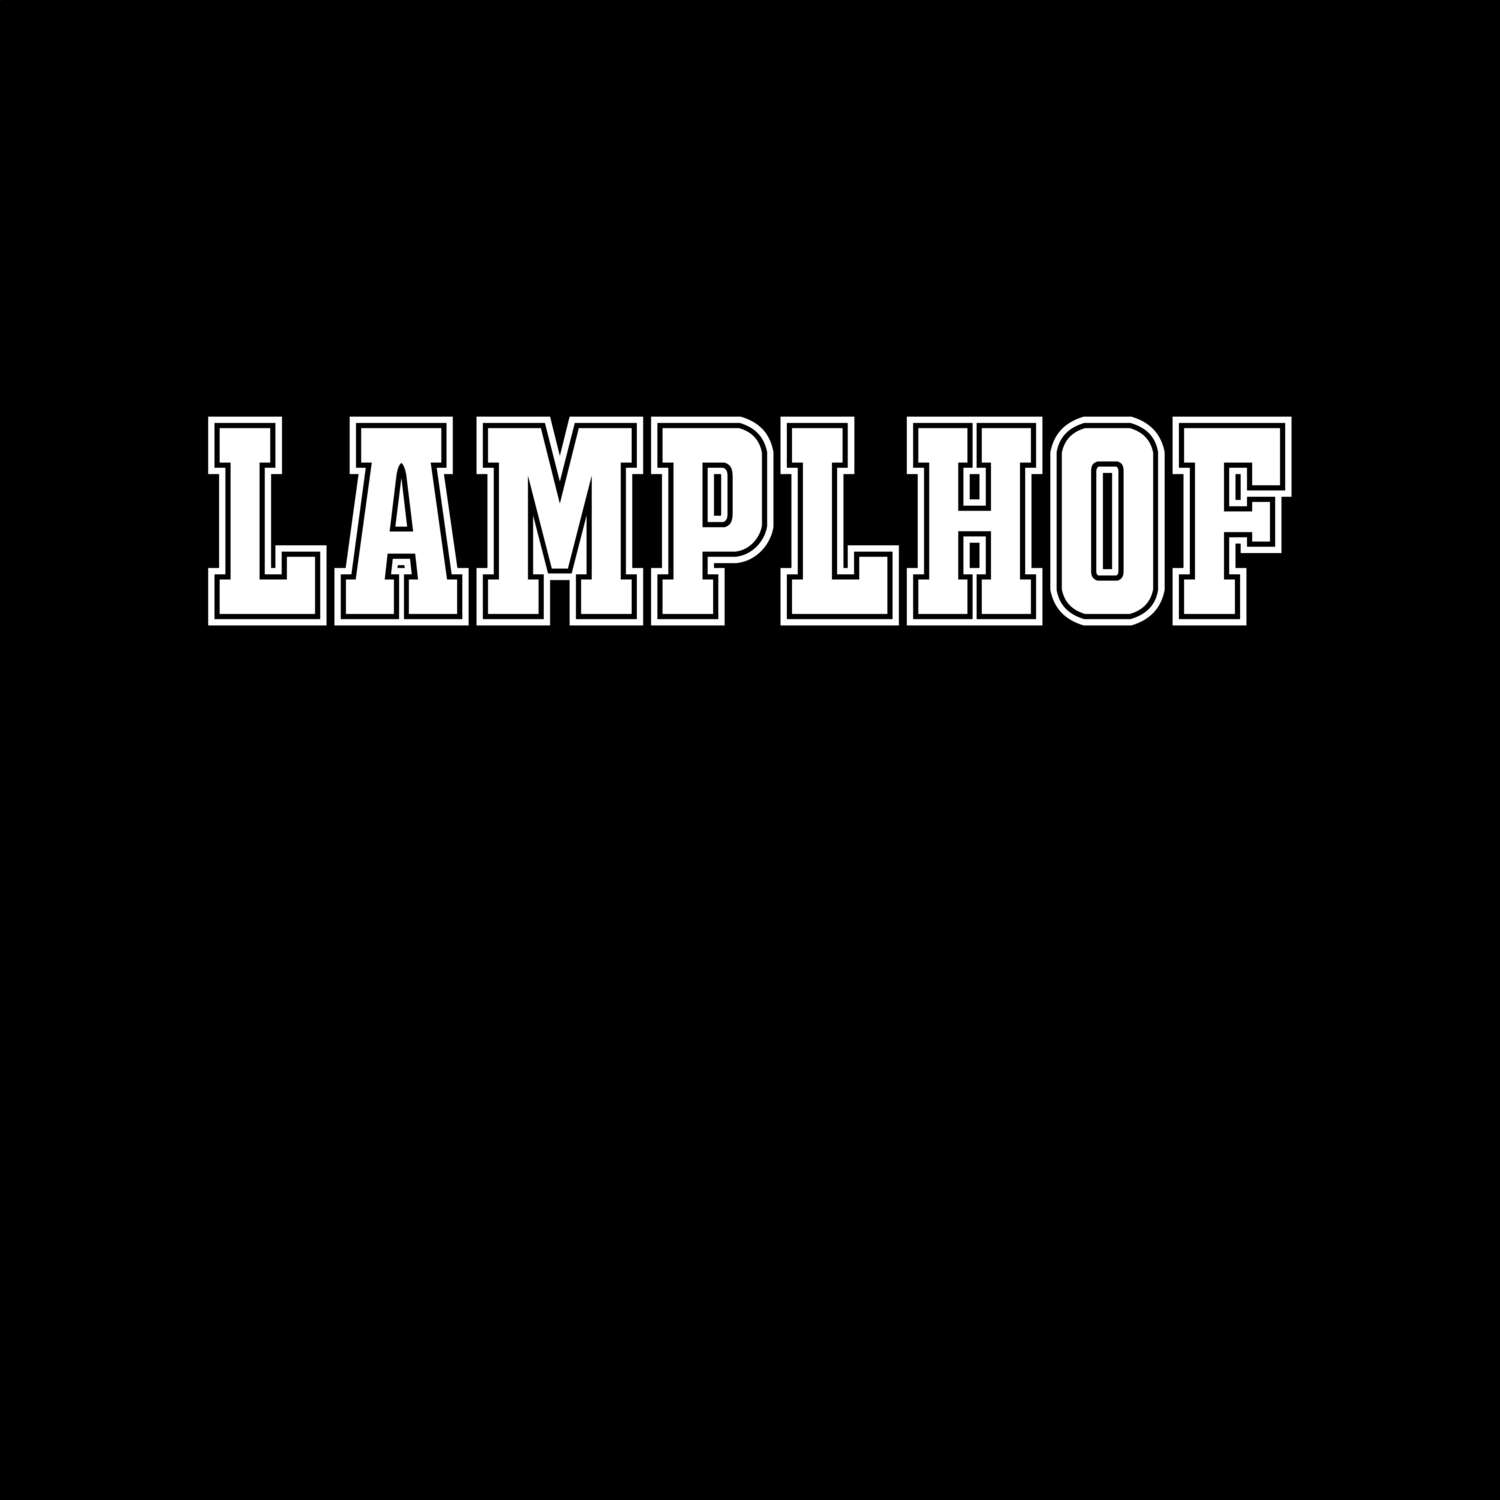 Lamplhof T-Shirt »Classic«